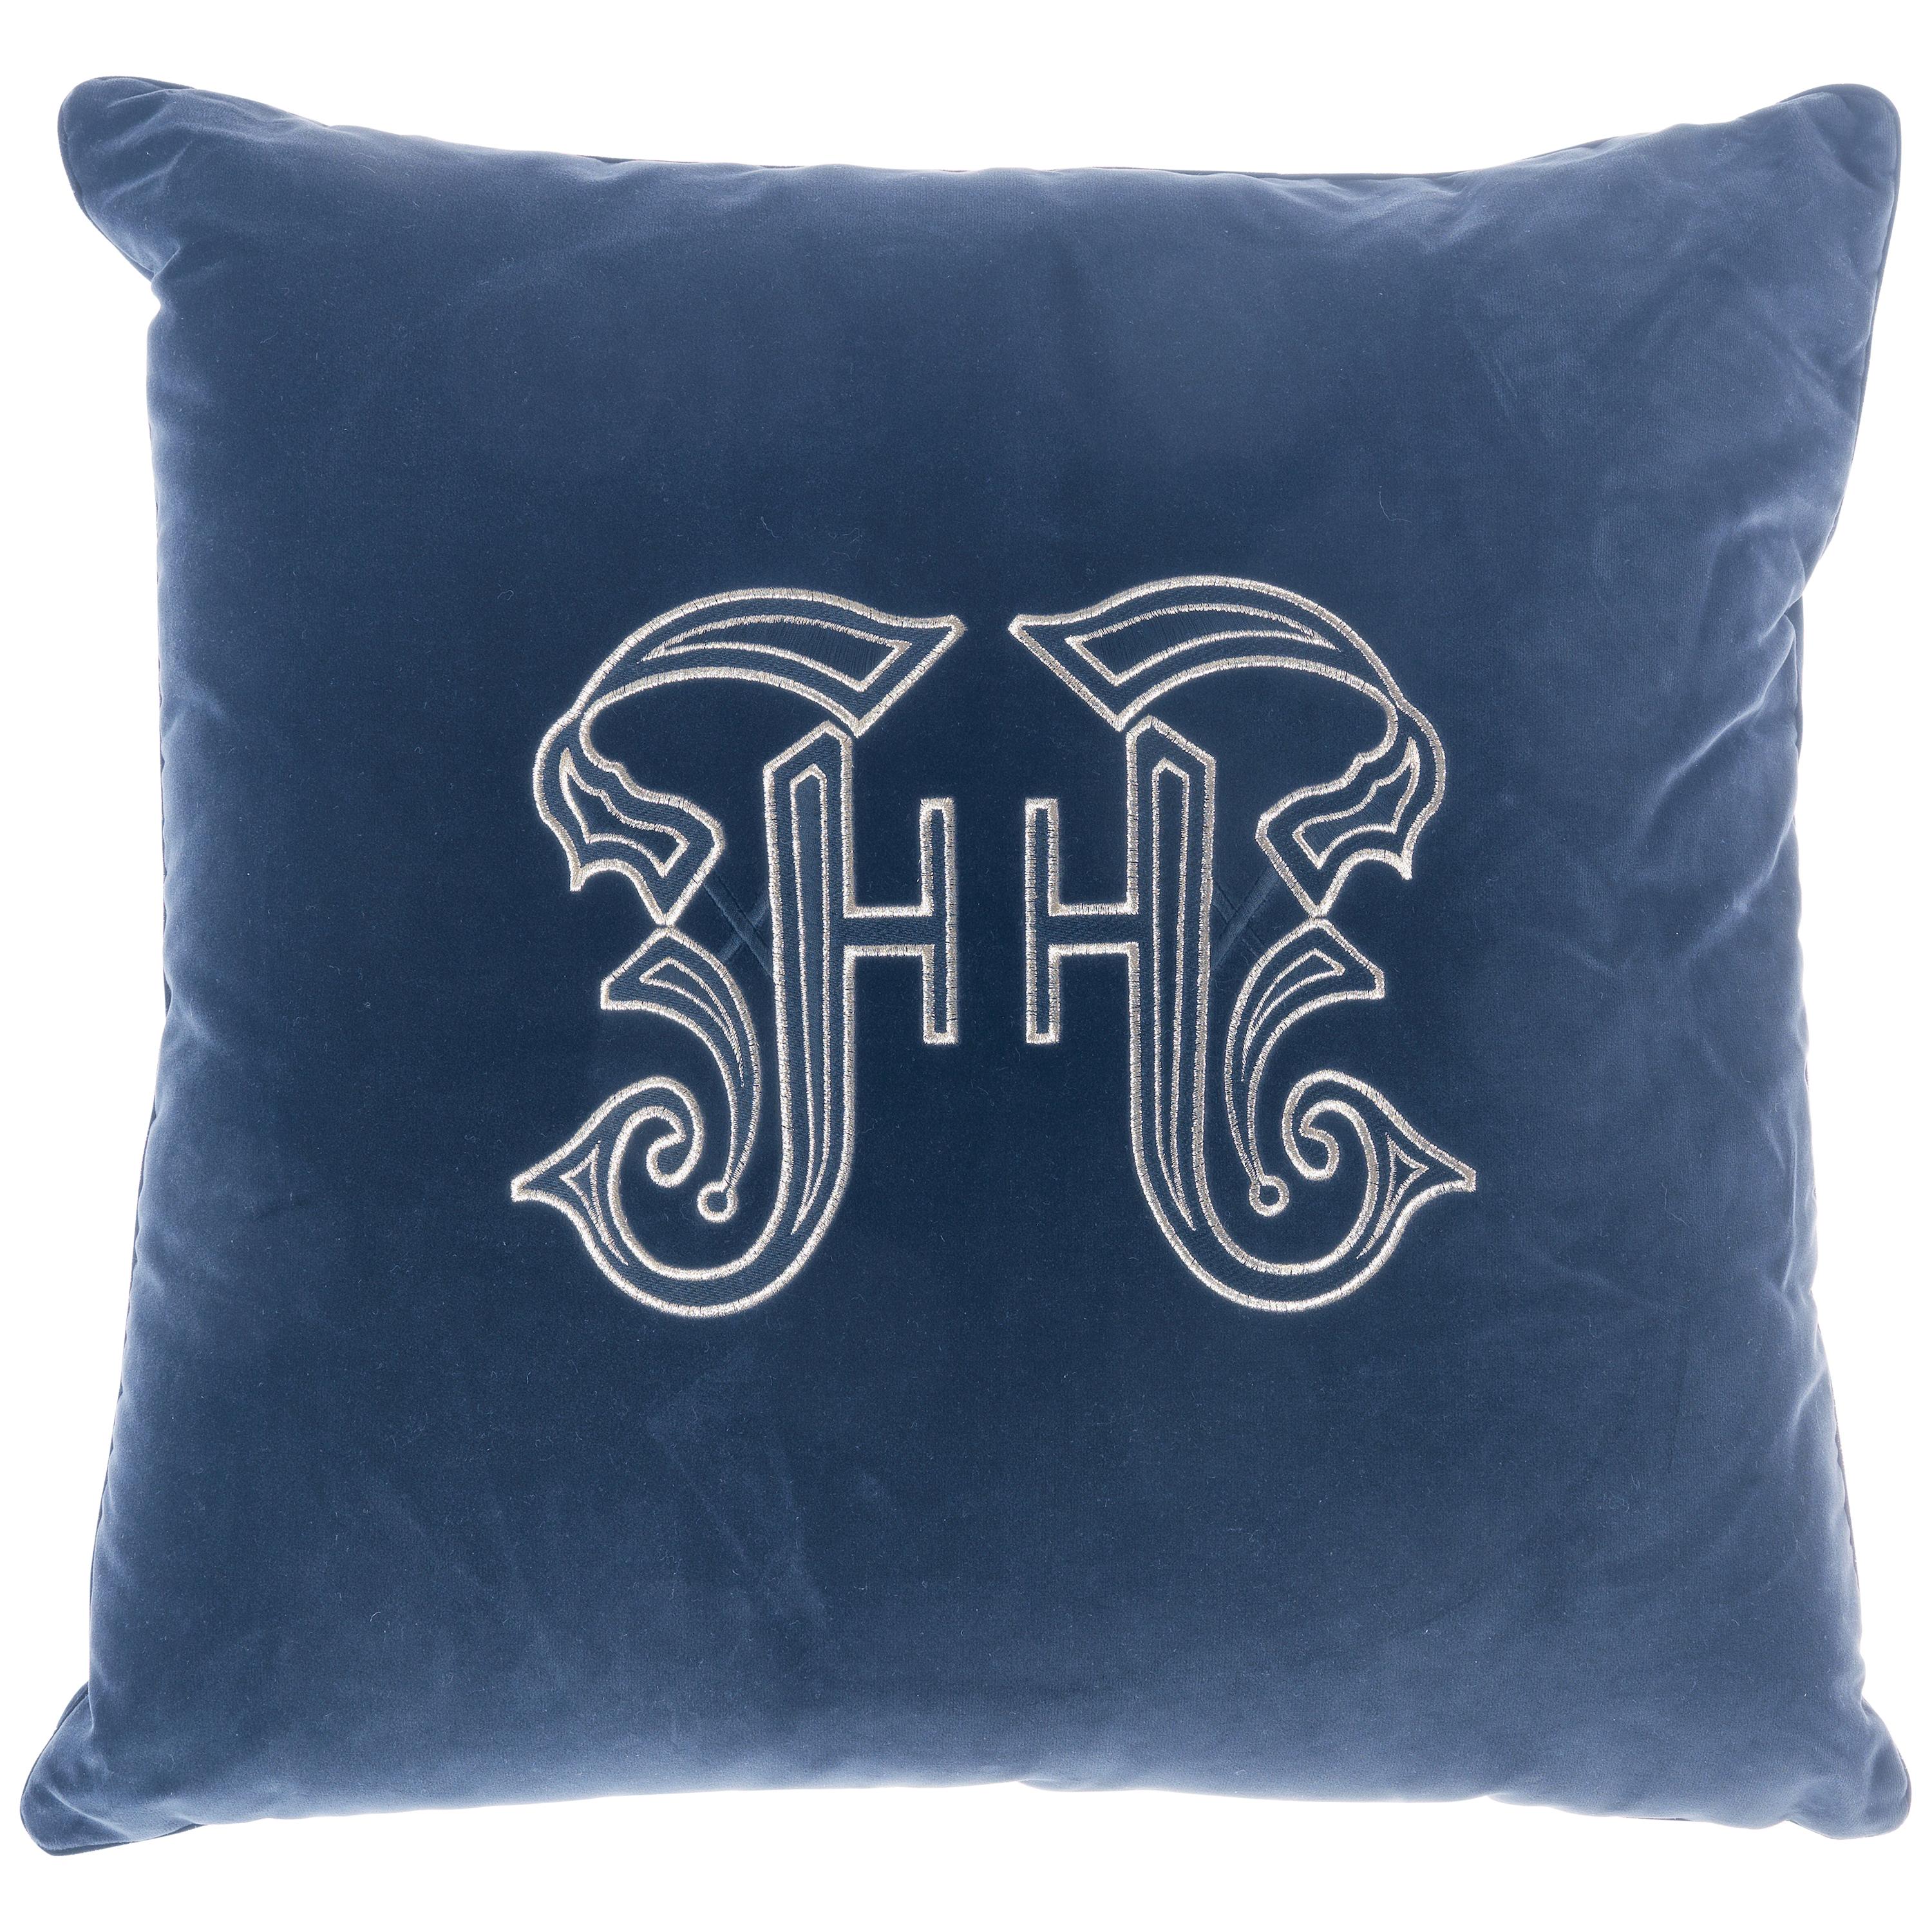 21st Century Gothic Lamé Blue Cushion in Velvet by Gianfranco Ferré Home